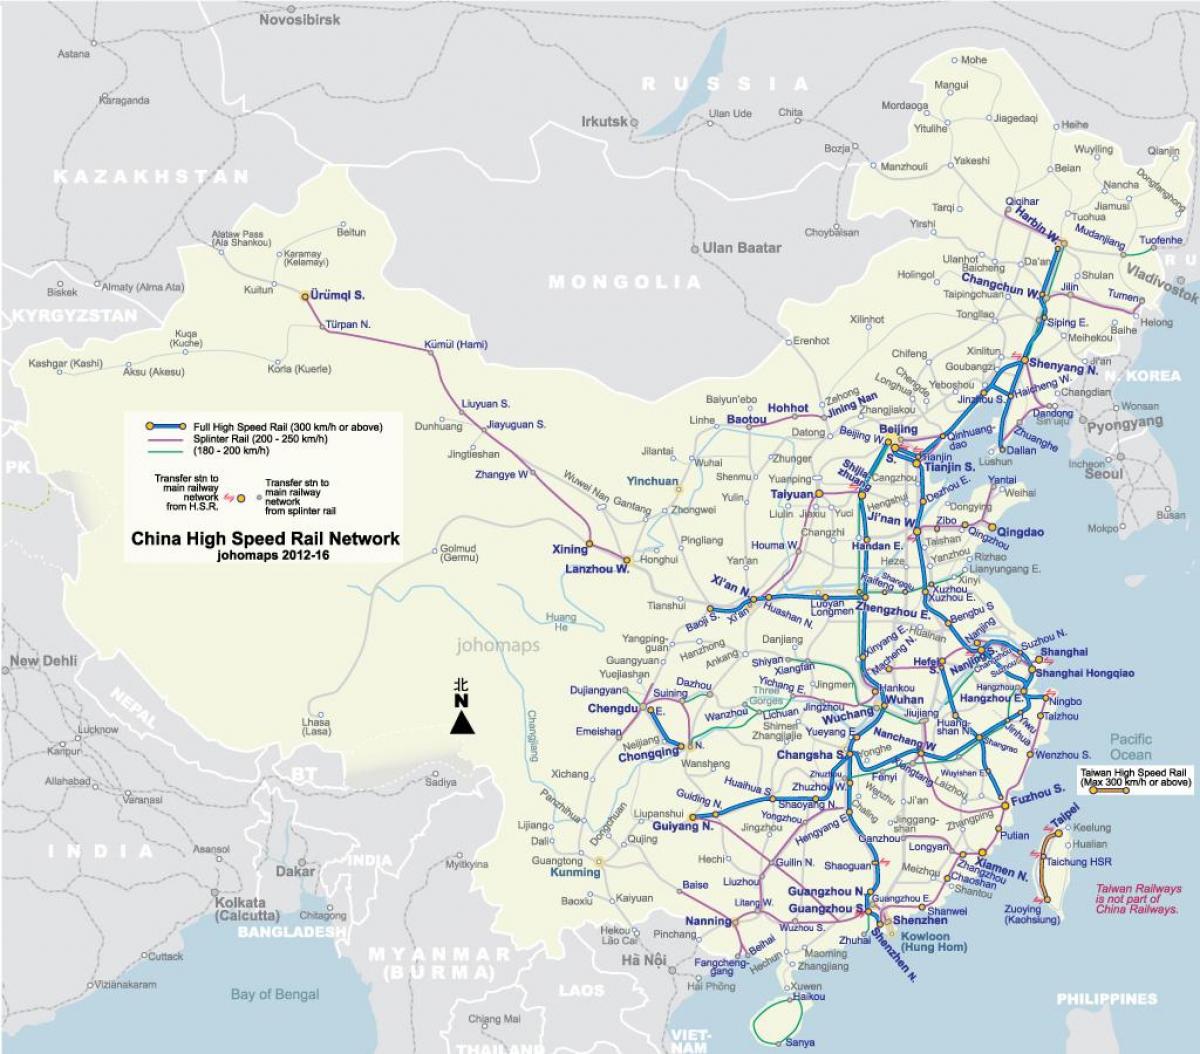 abiadura handiko trenbide Txina mapa